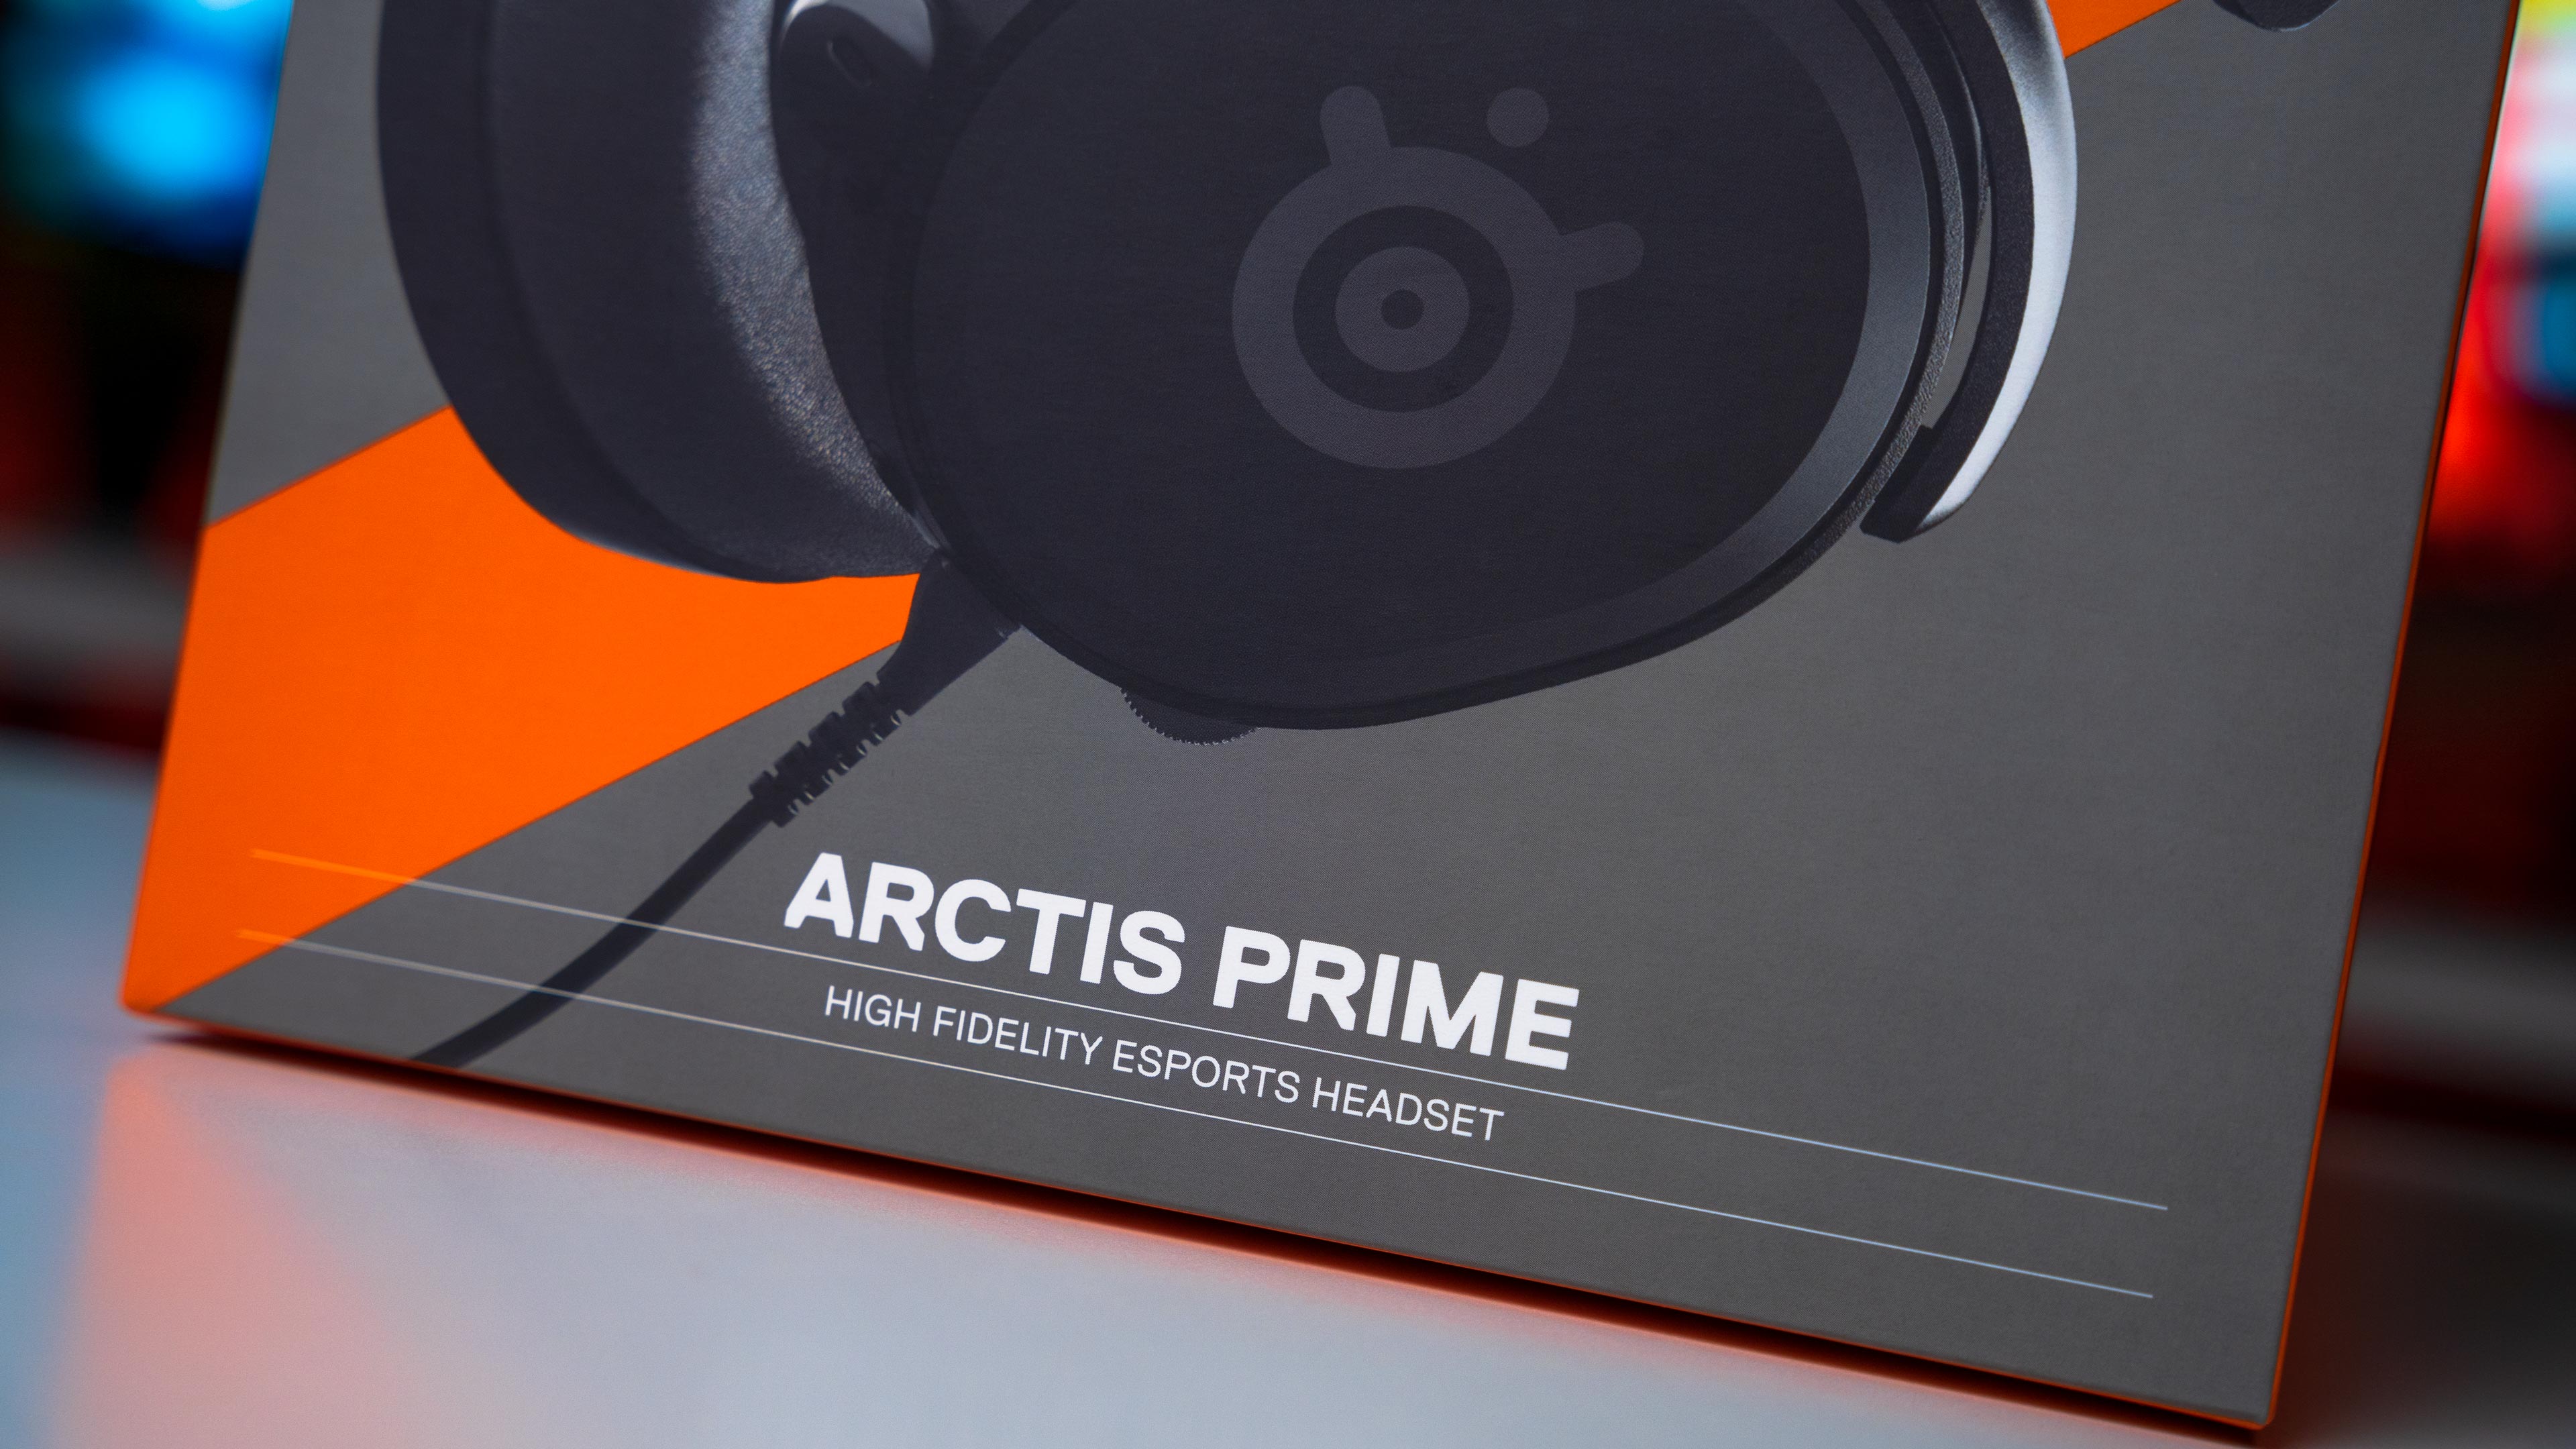 Steelseries Arctis Prime Box (5)